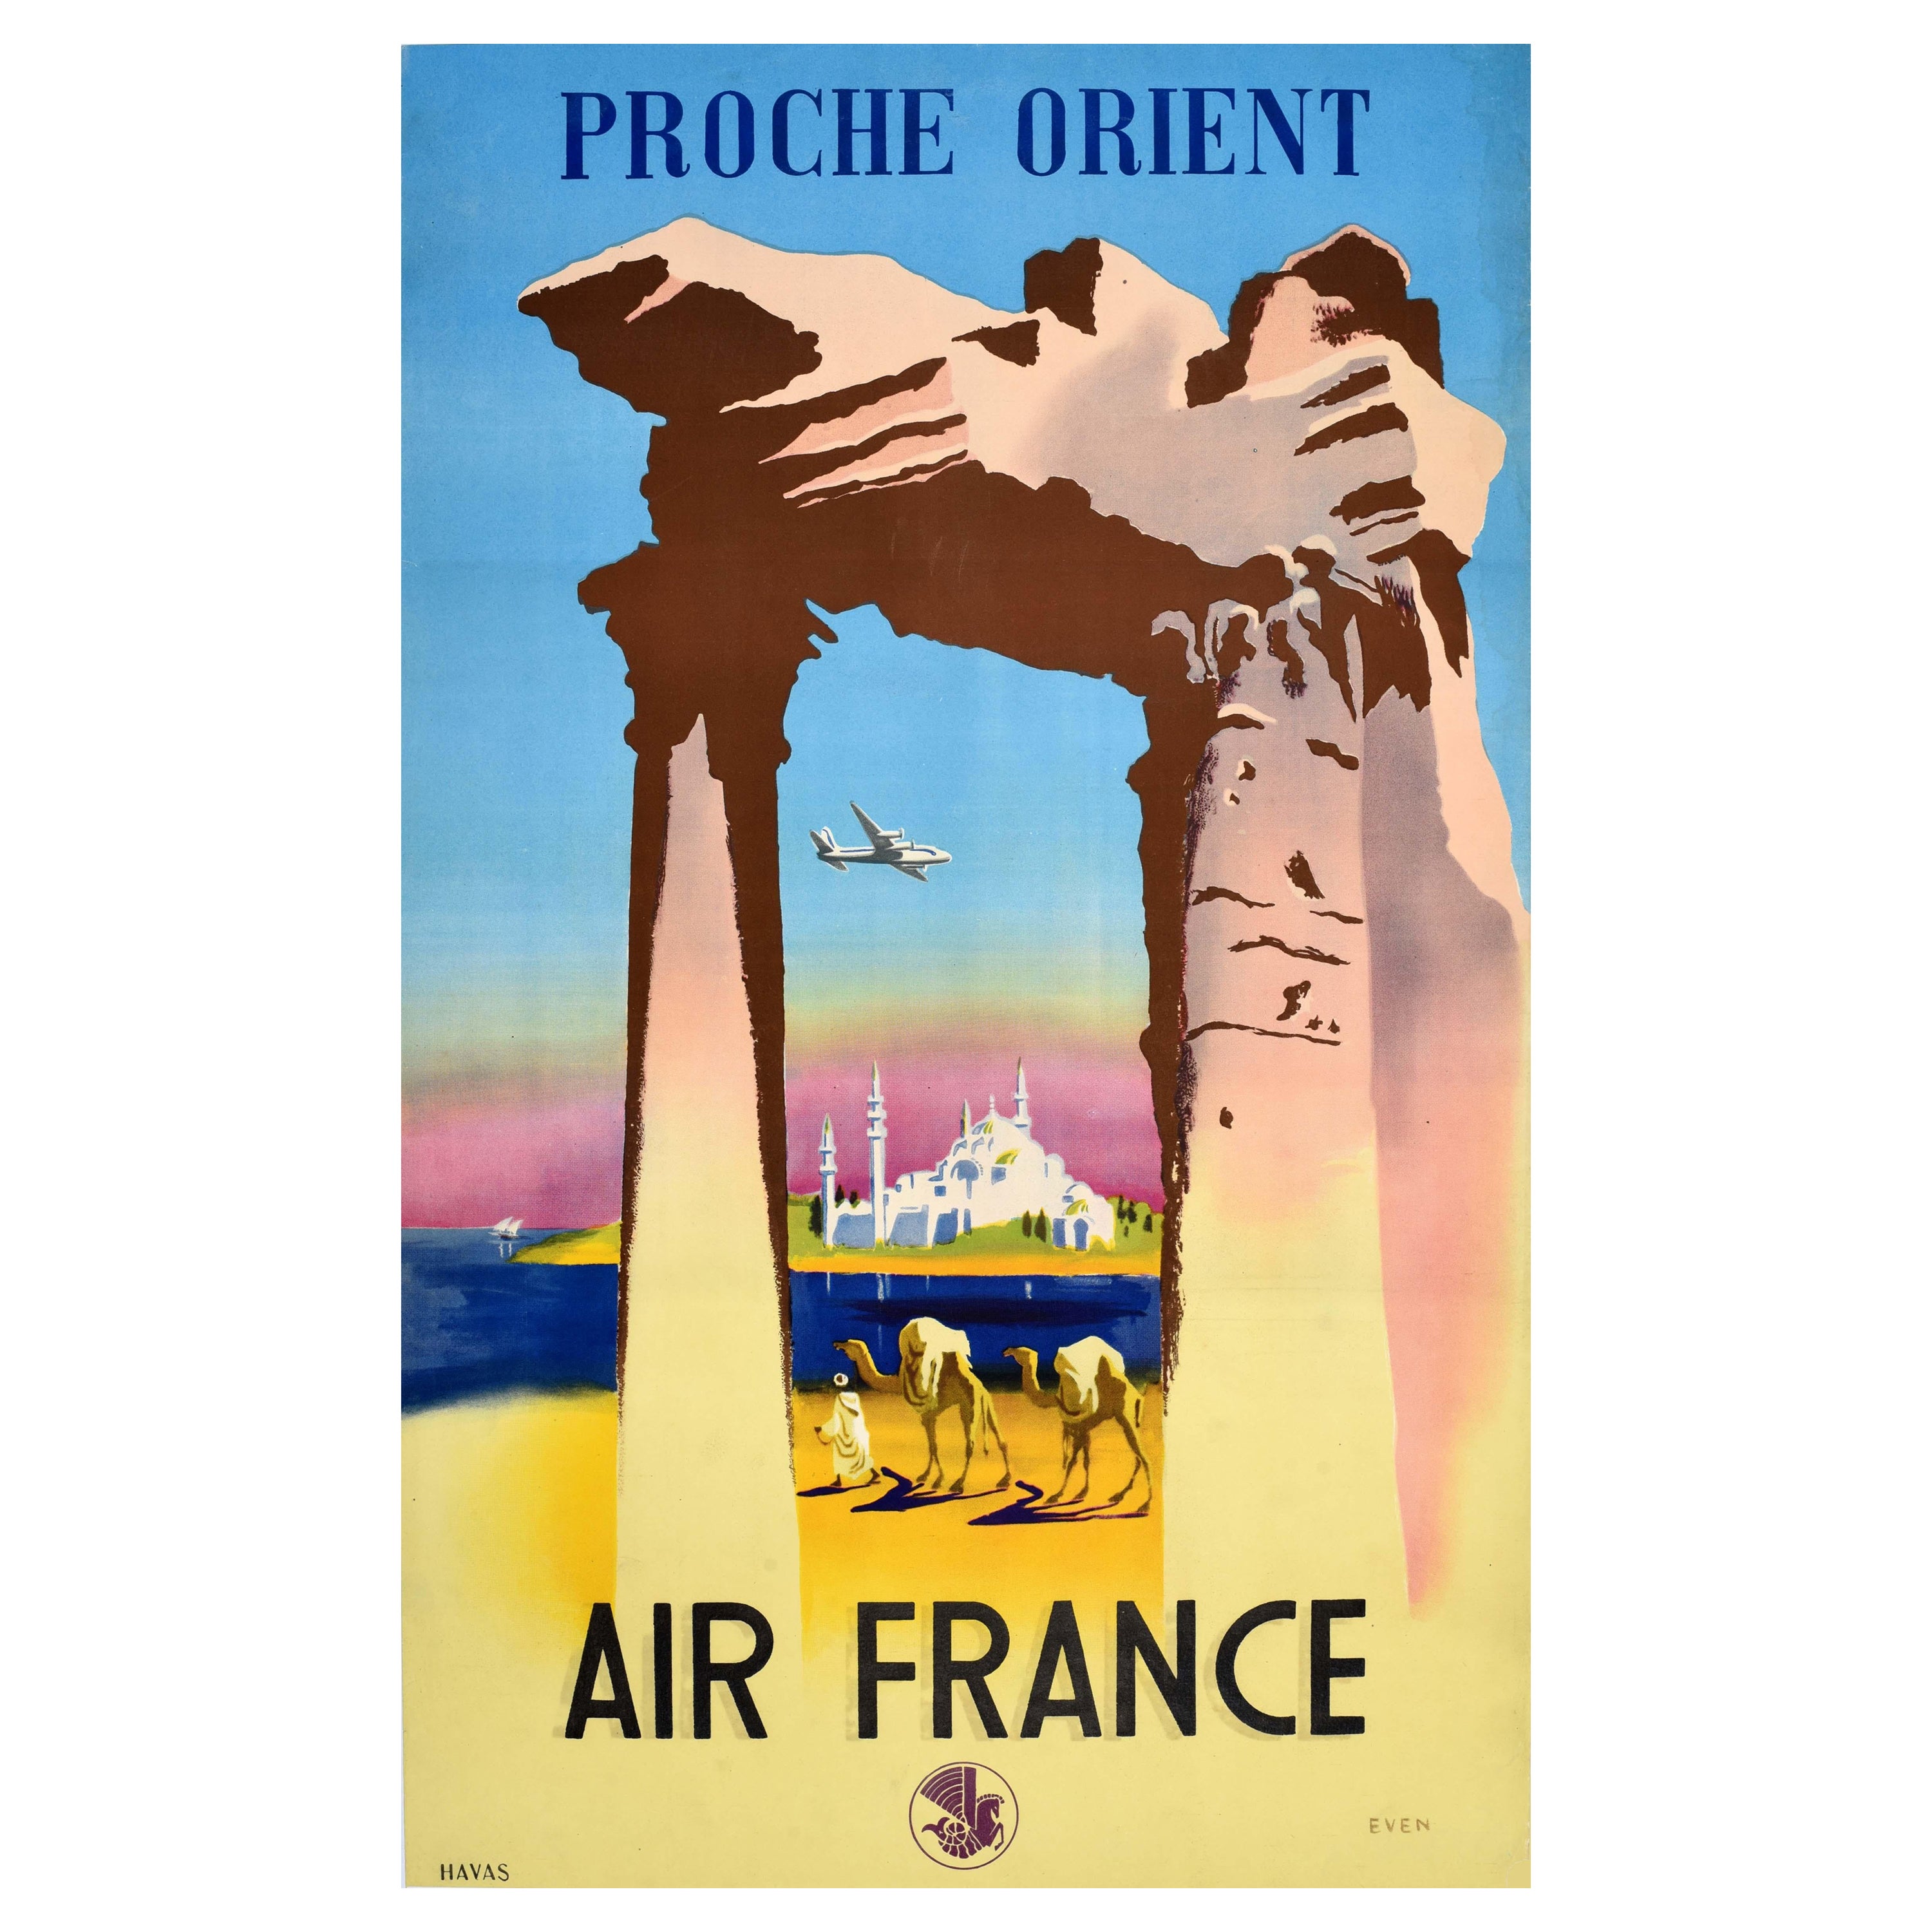 Original Vintage Travel Poster Air France Middle East Proche Orient Jean Even For Sale